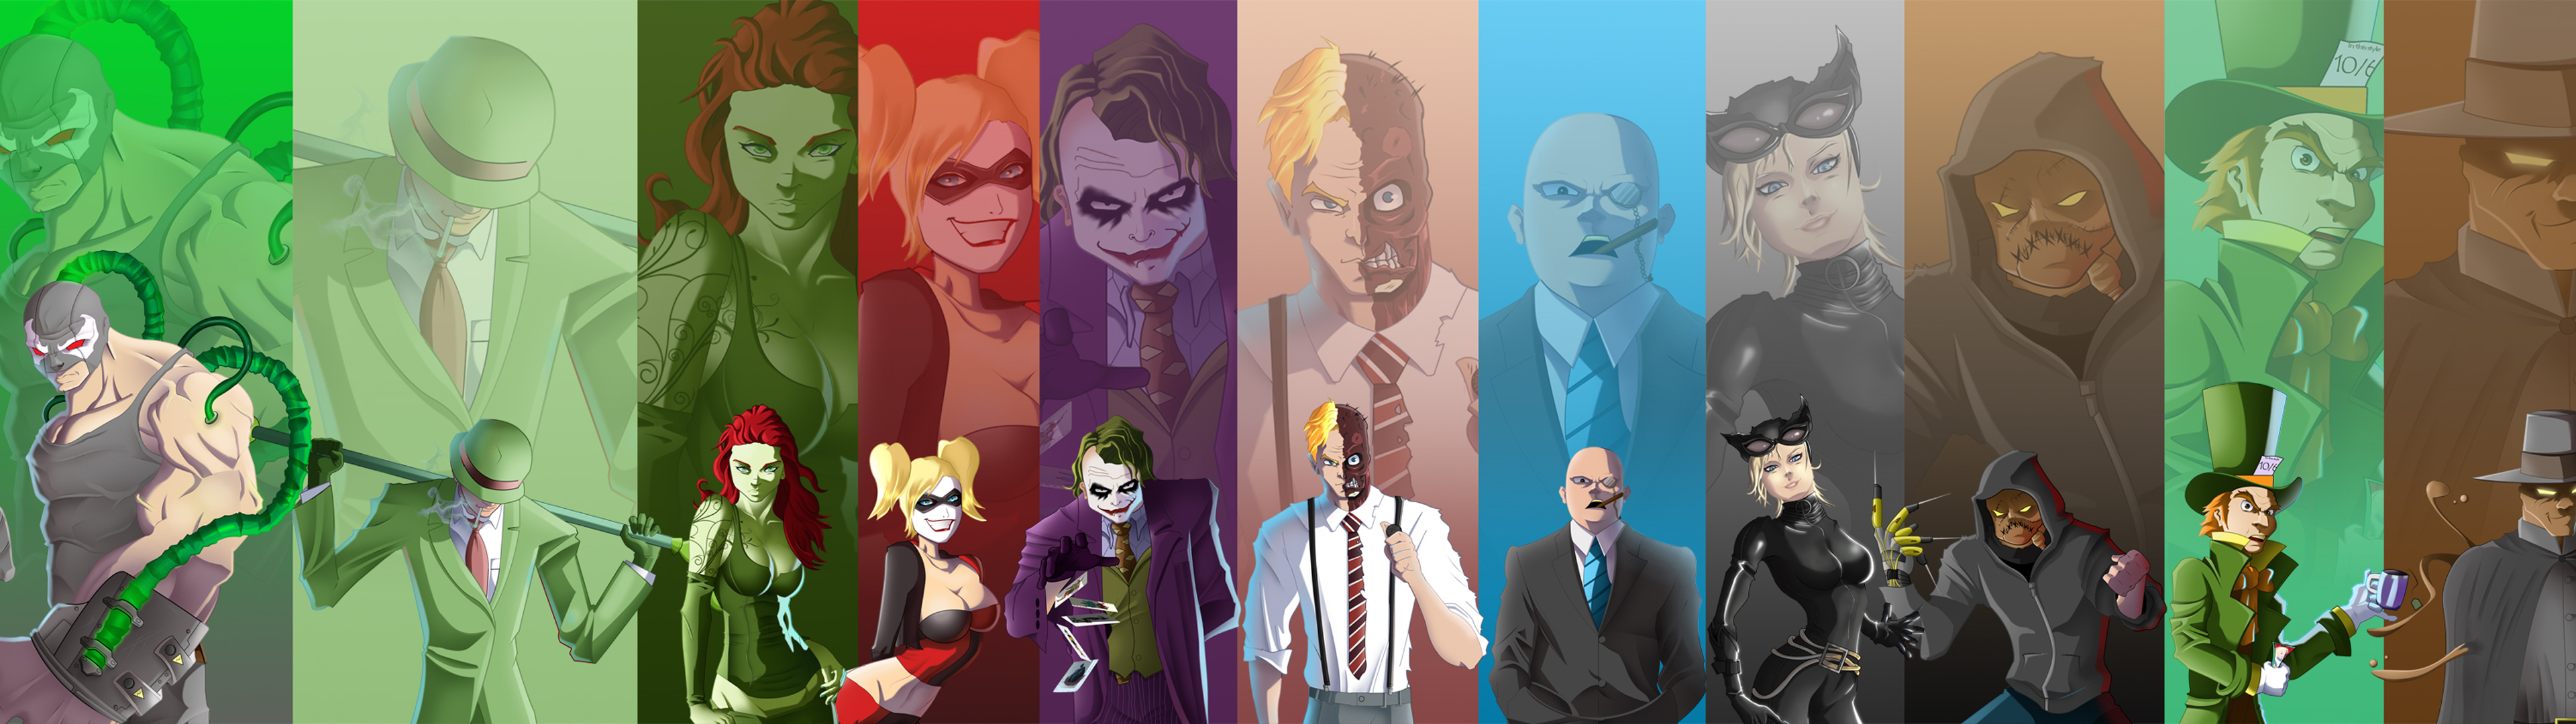 riddler (dc comics), comics, batman, bane (dc comics), catwoman, harley quinn, joker, poison ivy, two face